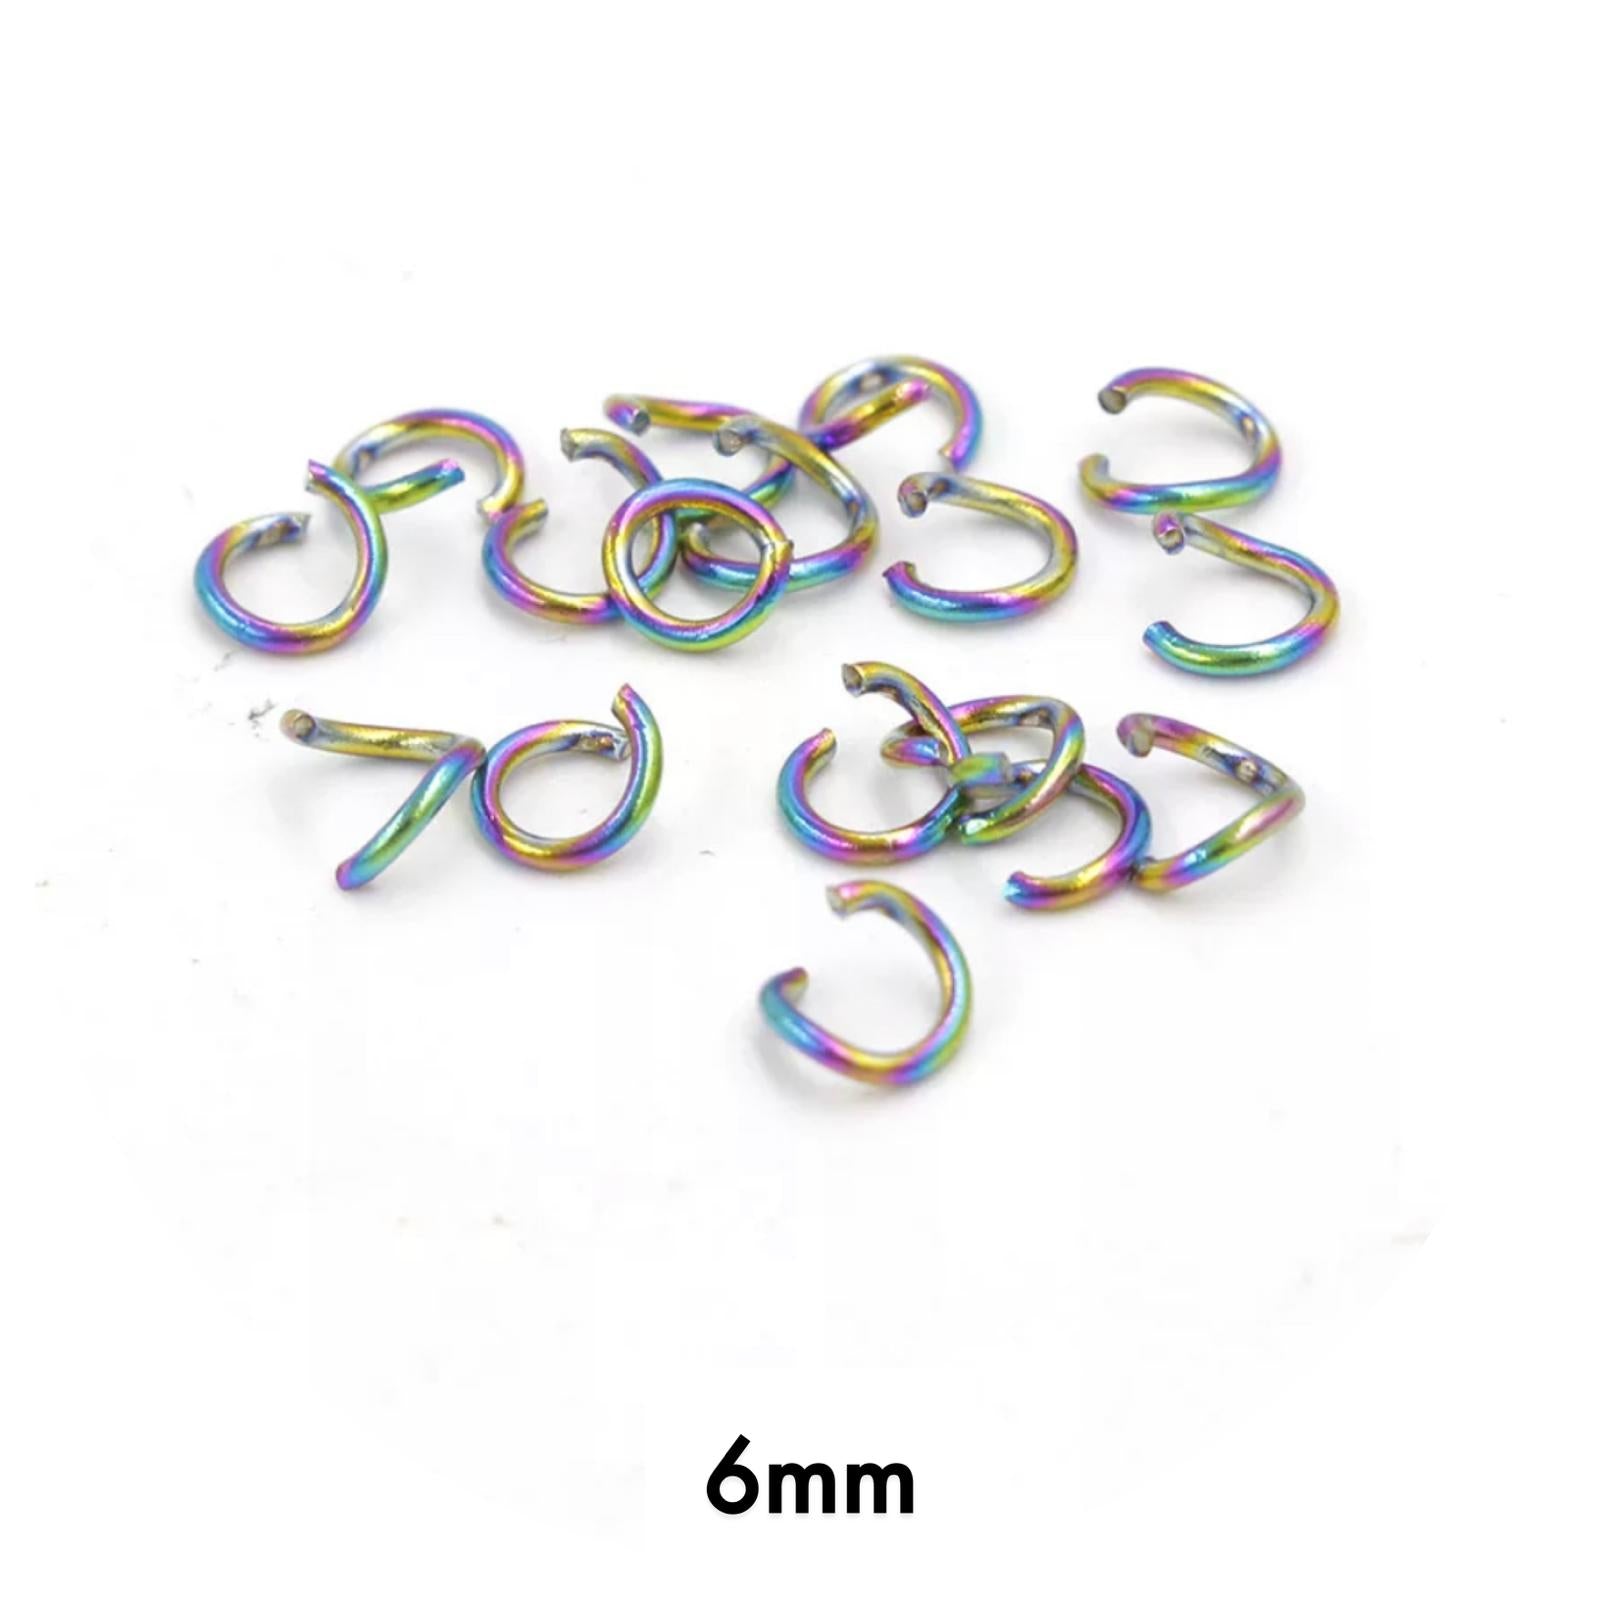 6mm Jump Rings - Rainbow Stainless Steel - 40 pcs